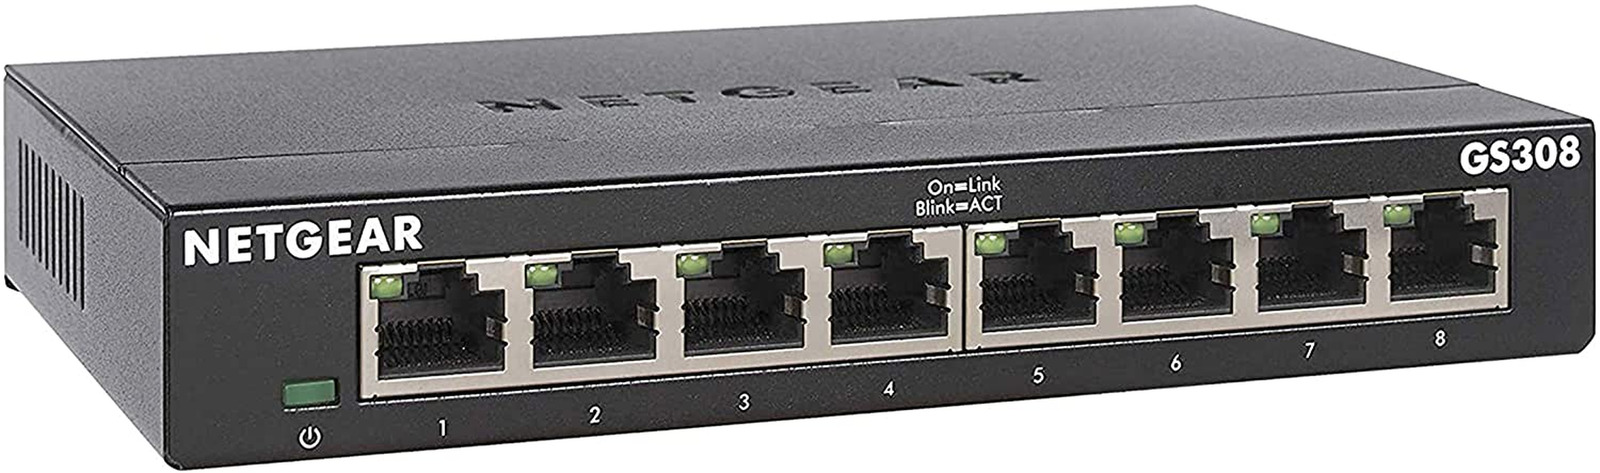 NETGEAR 8-Port Gigabit Ethernet Unmanaged Switch (GS308) - Home Network Black